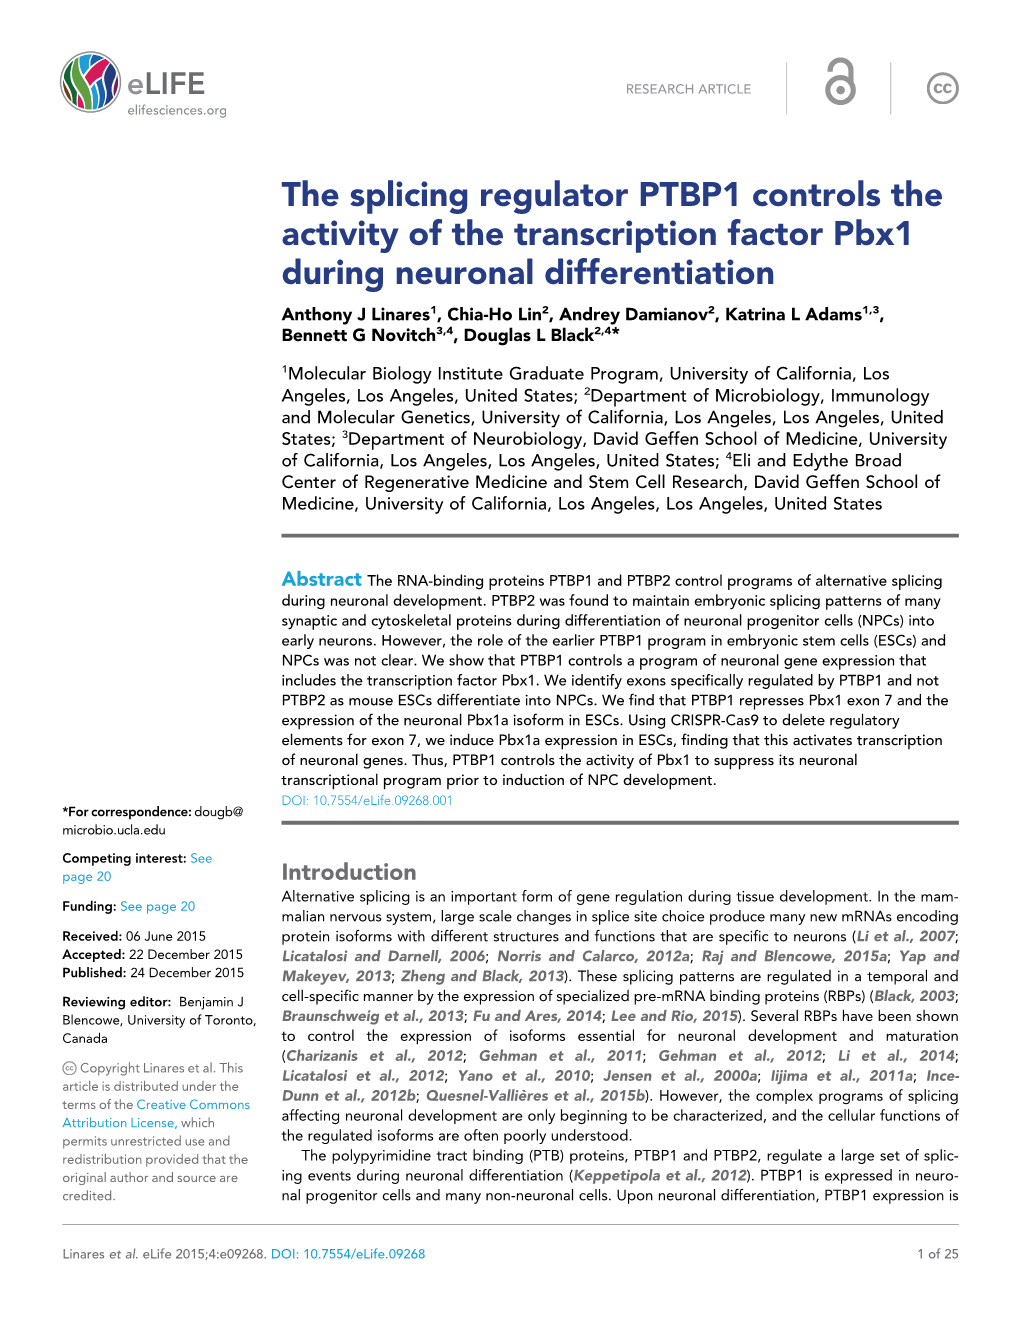 The Splicing Regulator PTBP1 Controls the Activity of the Transcription Factor